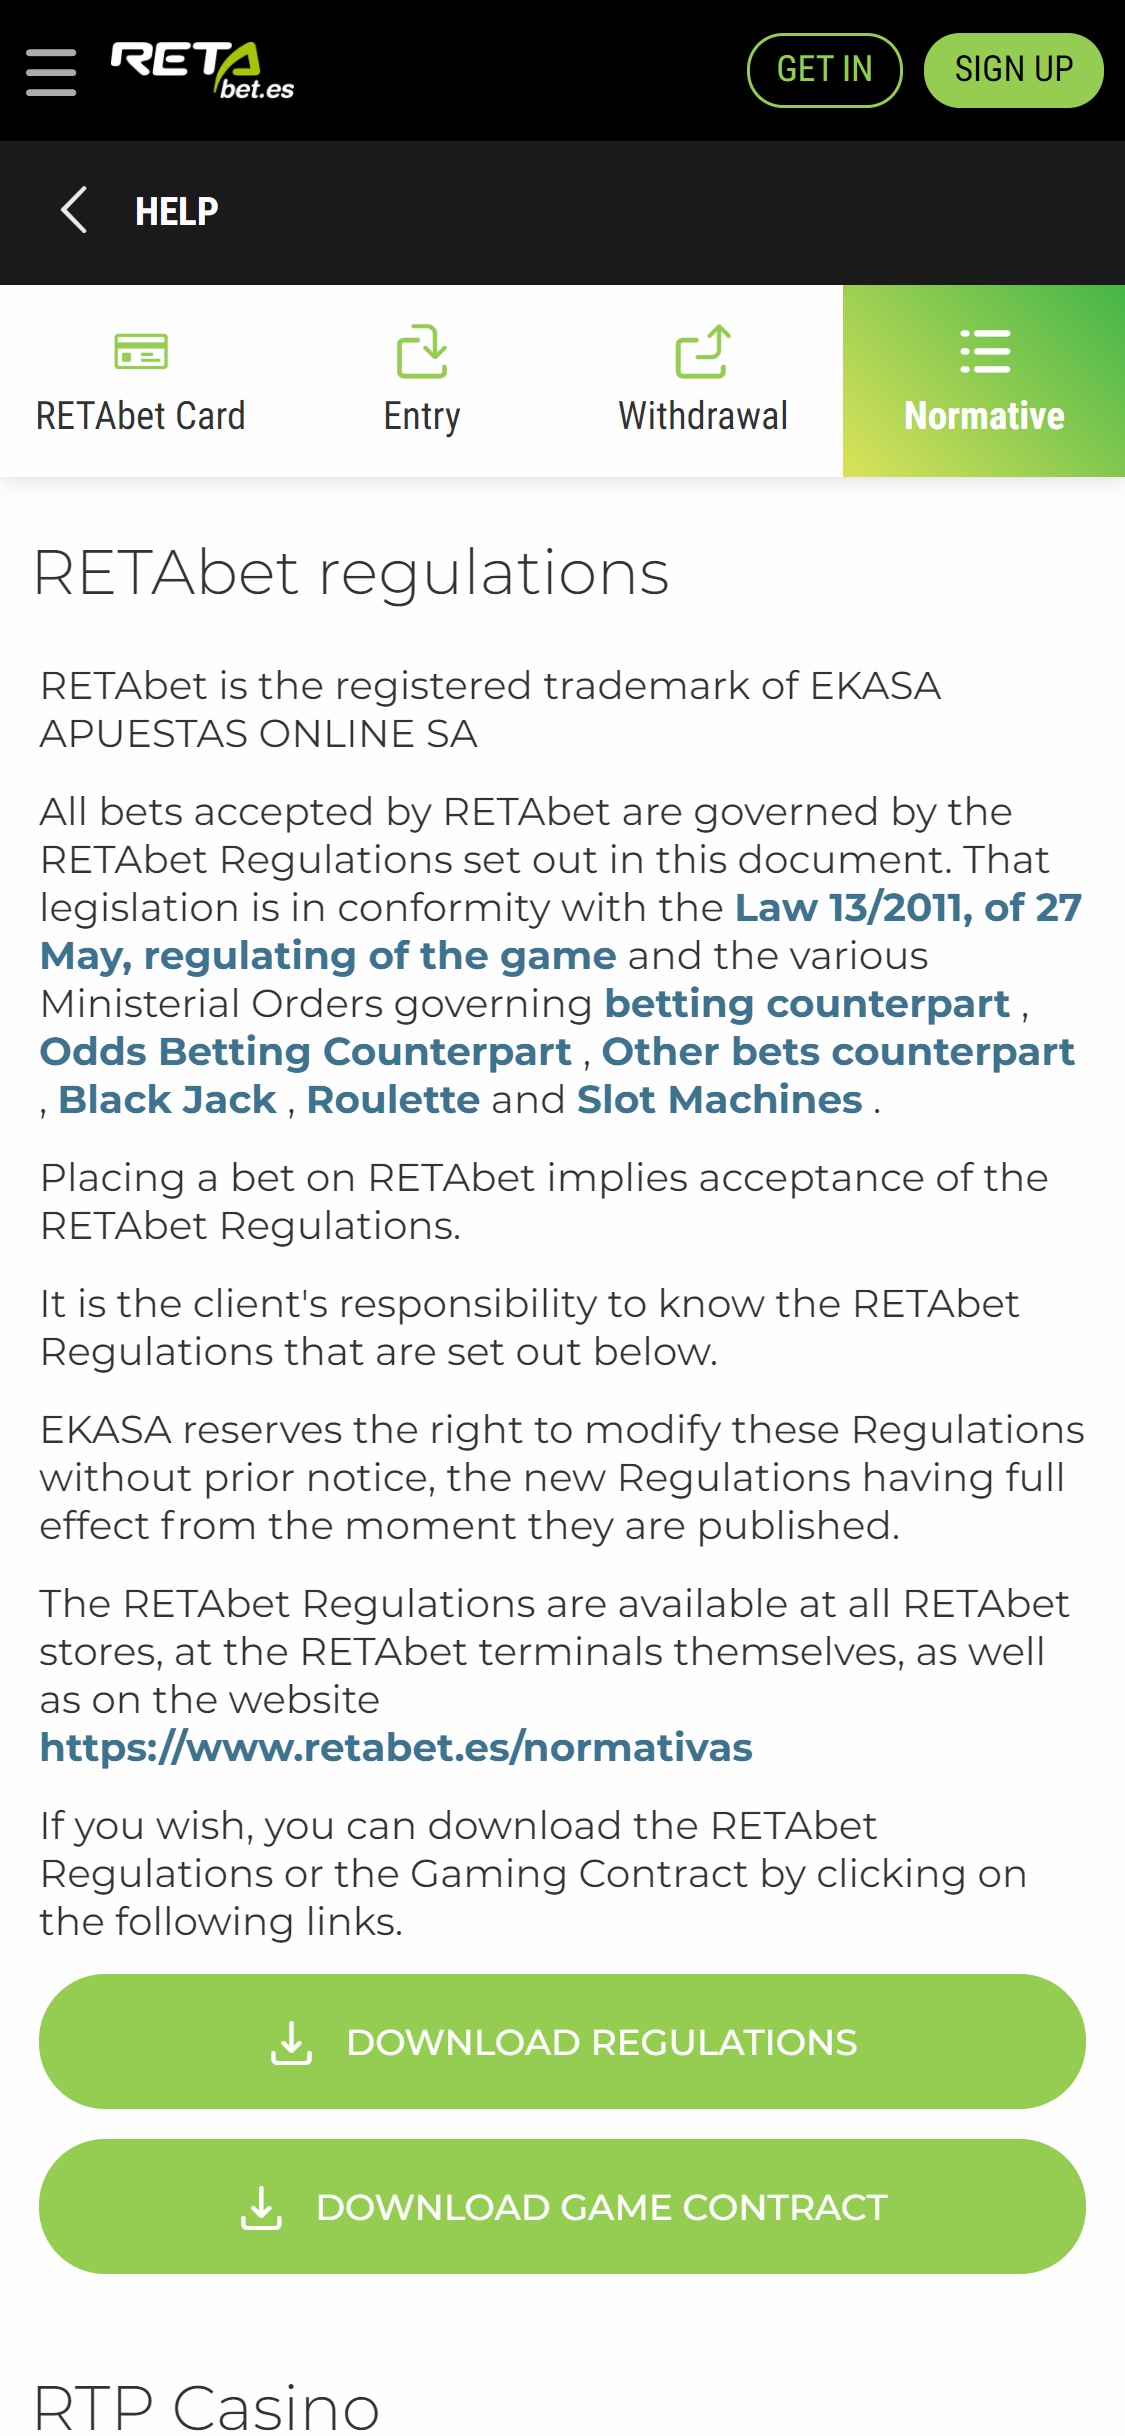 Retabet Casino Mobile Support Review